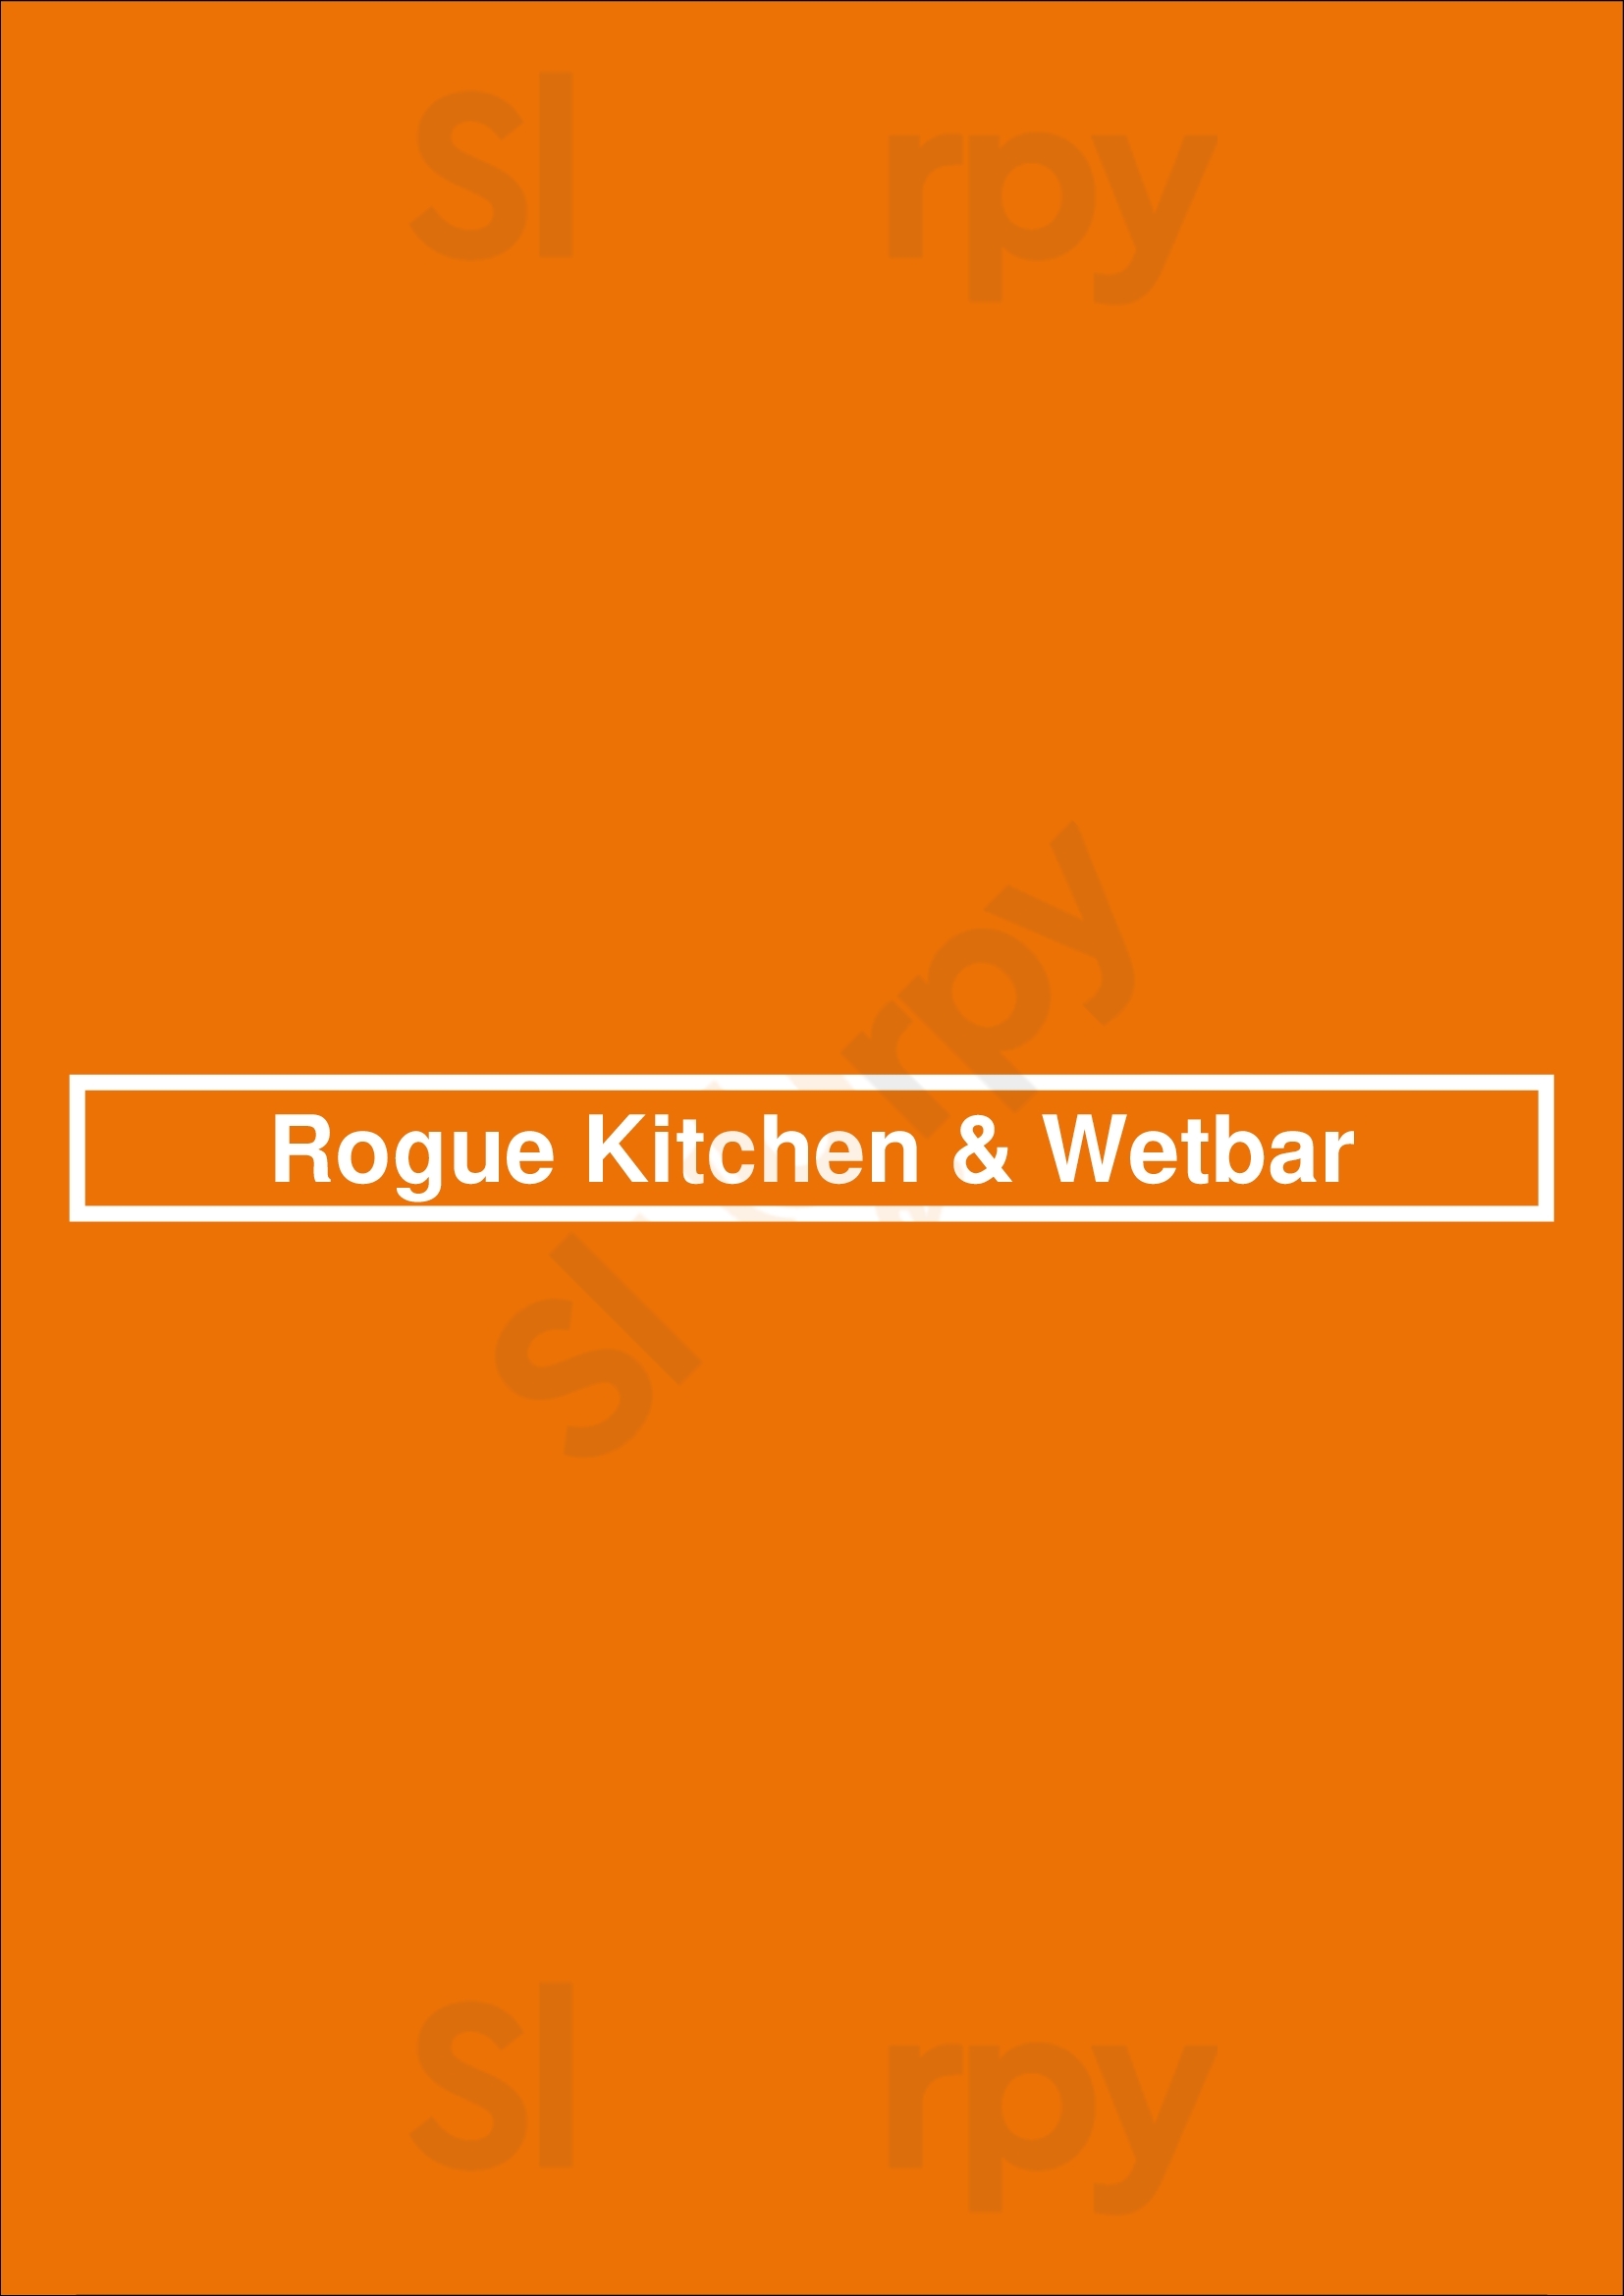 Rogue Kitchen & Wetbar Vancouver Menu - 1